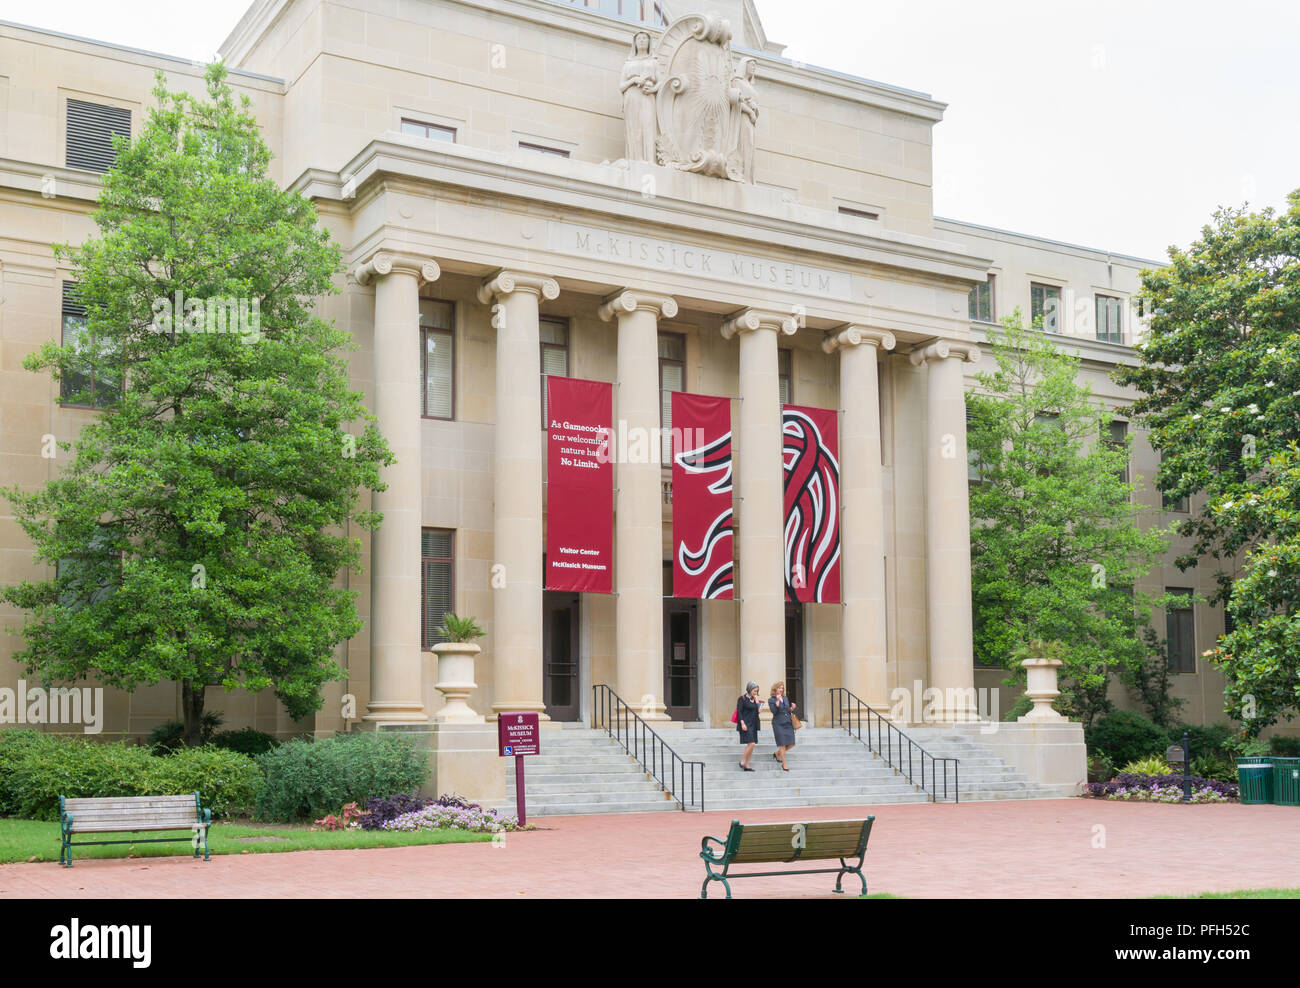 COLUMBIA, SC/USA Juni 5, 2018: McKissick Museum auf dem Campus der Universität von South Carolina. Stockfoto